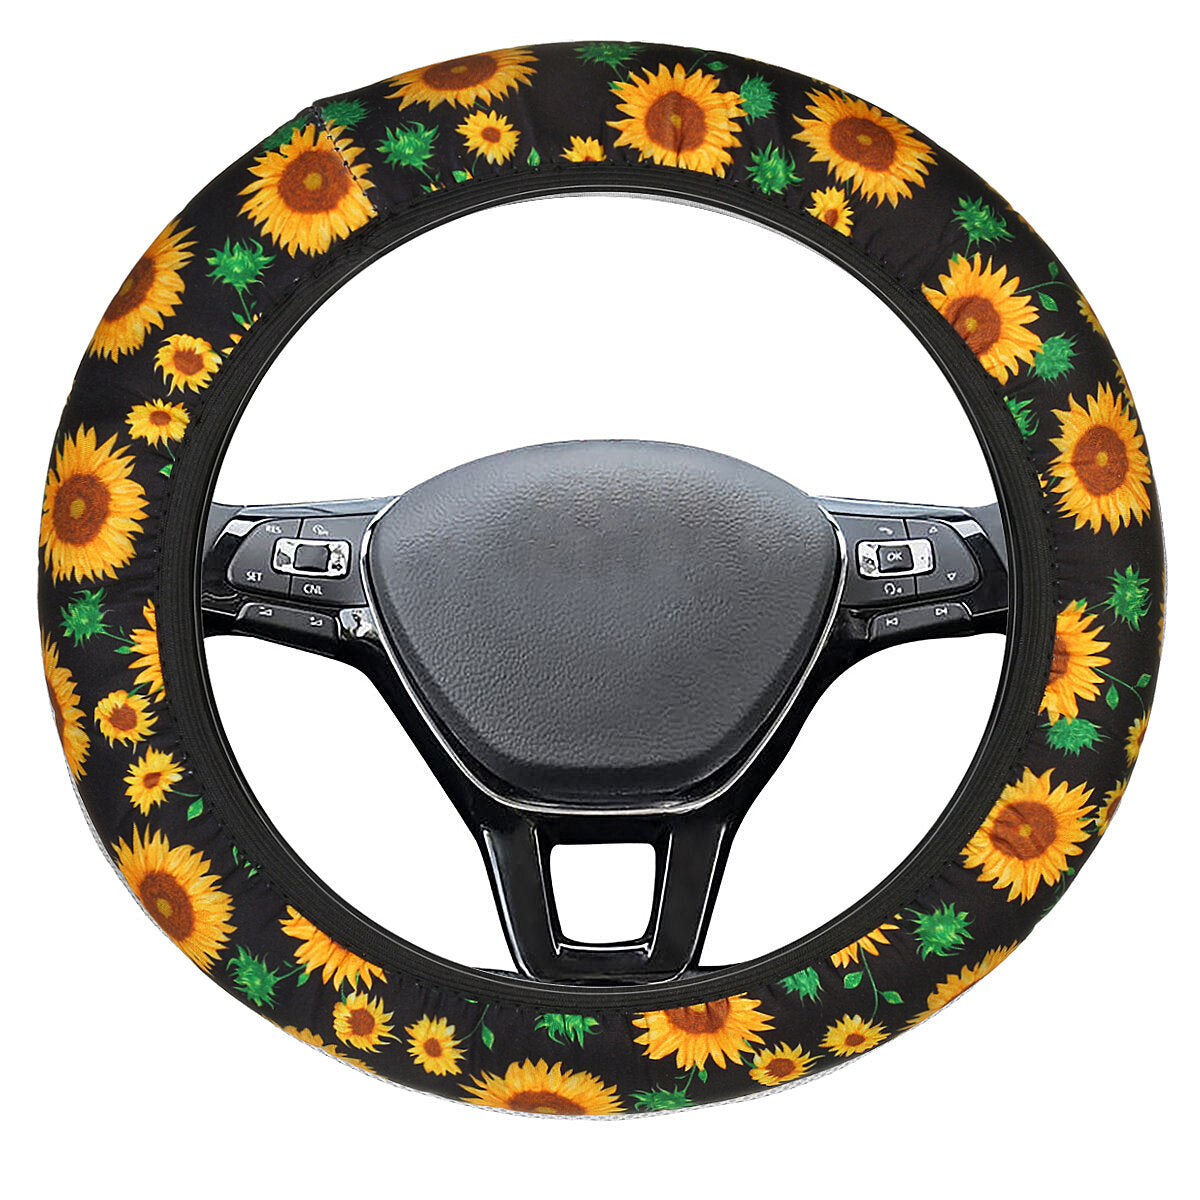 Car Steering Wheel Cover Protector Anti Slip Suede Universal Protector